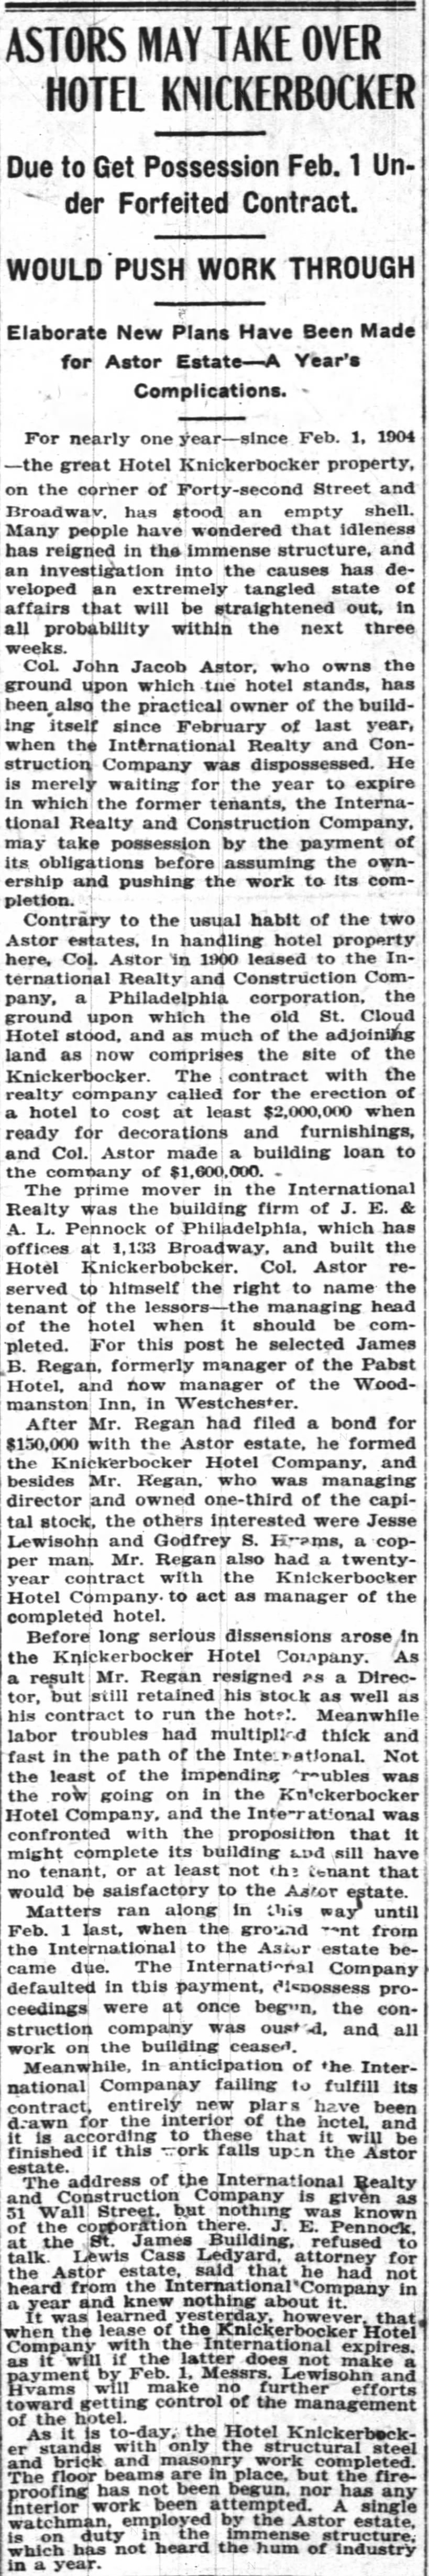 Astors May Take Over Hotel Knickerbocker